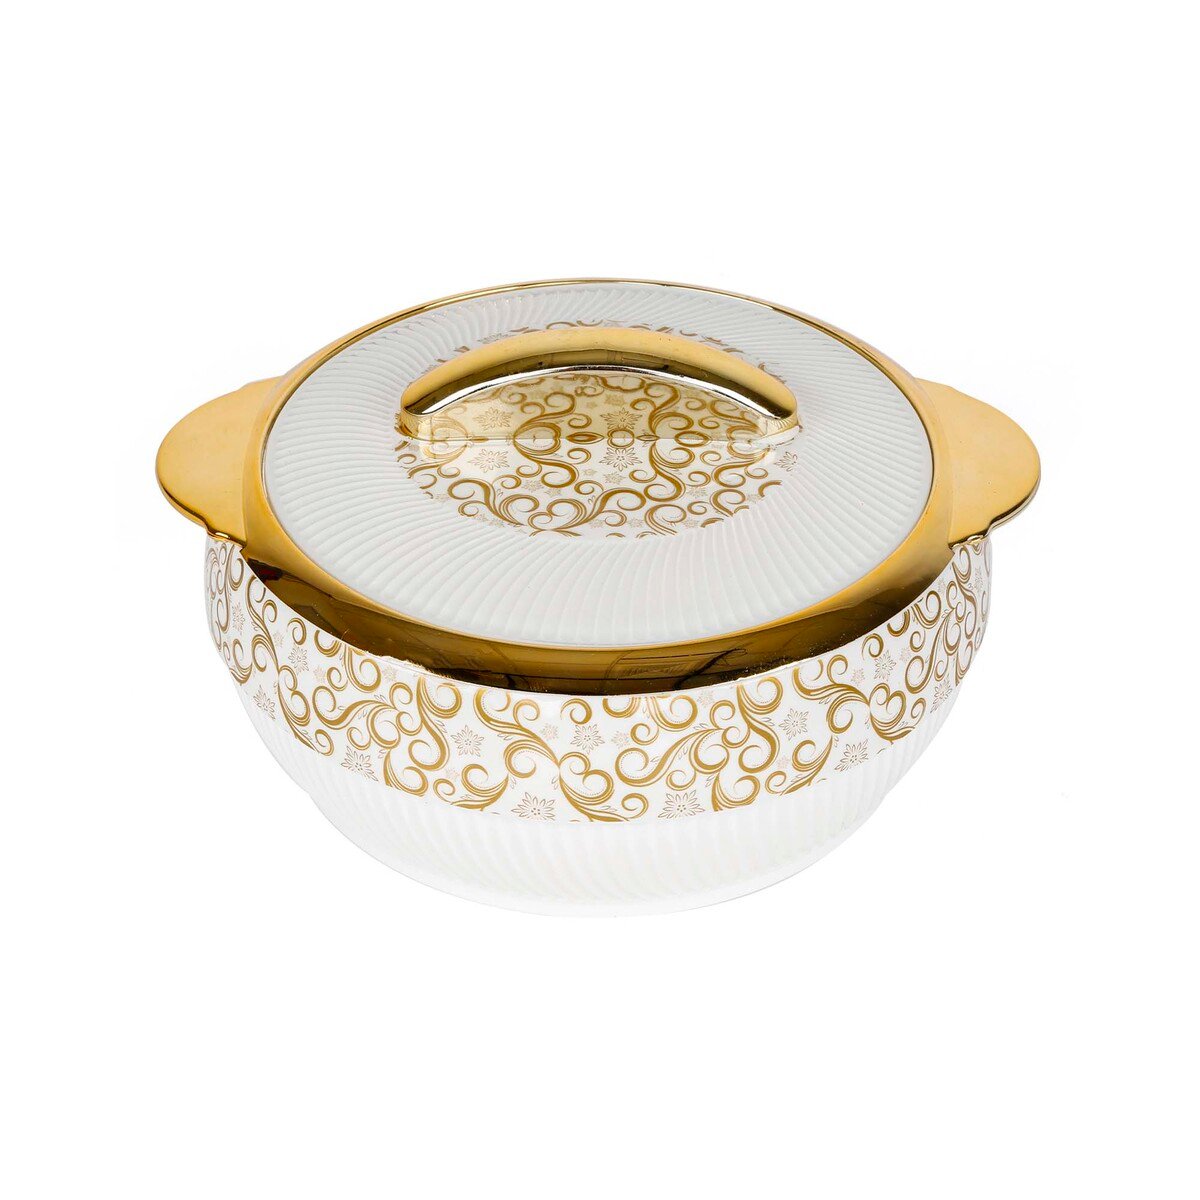 Chefline Plastic Insulated Hot Pot Carnival Gold, 2500 ml